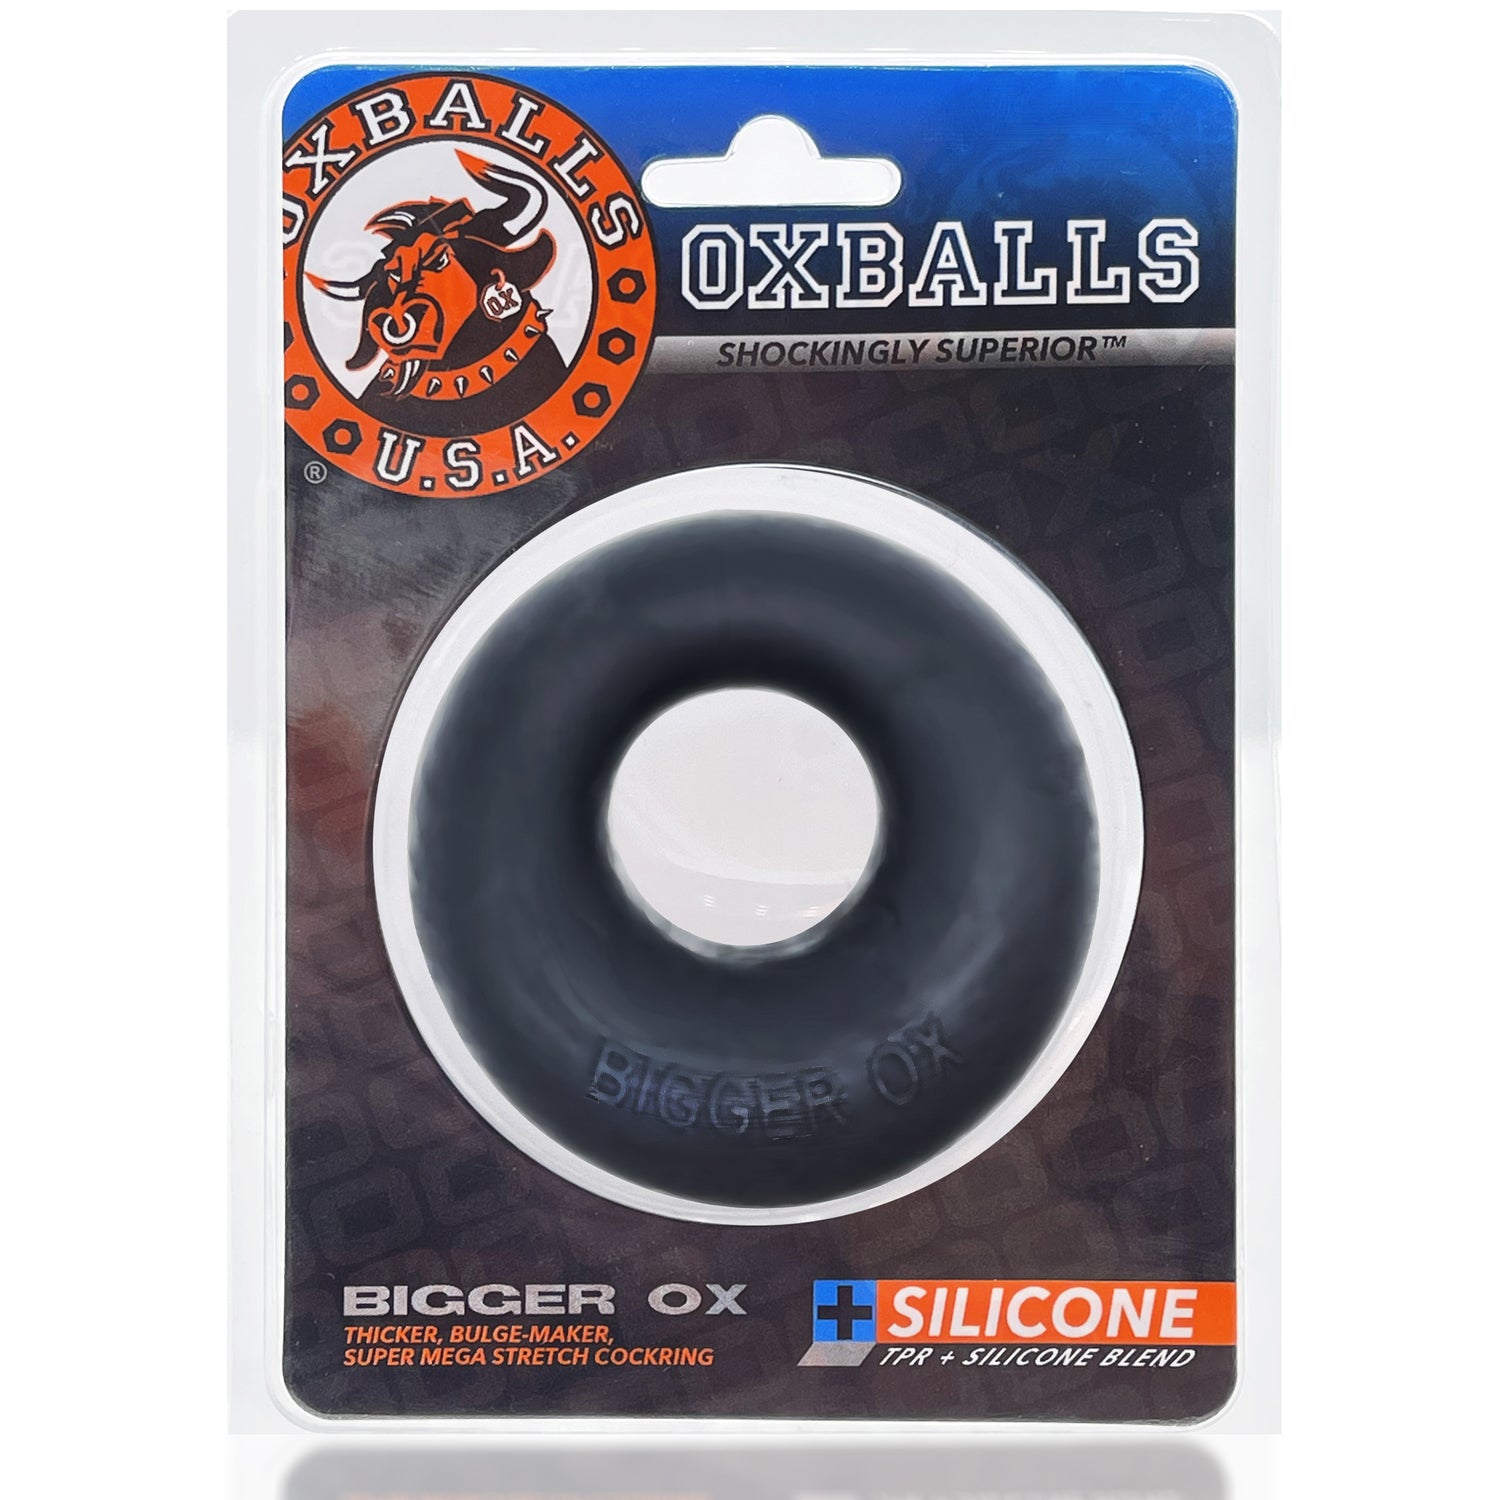 Oxballs BIGGER OX Cockring